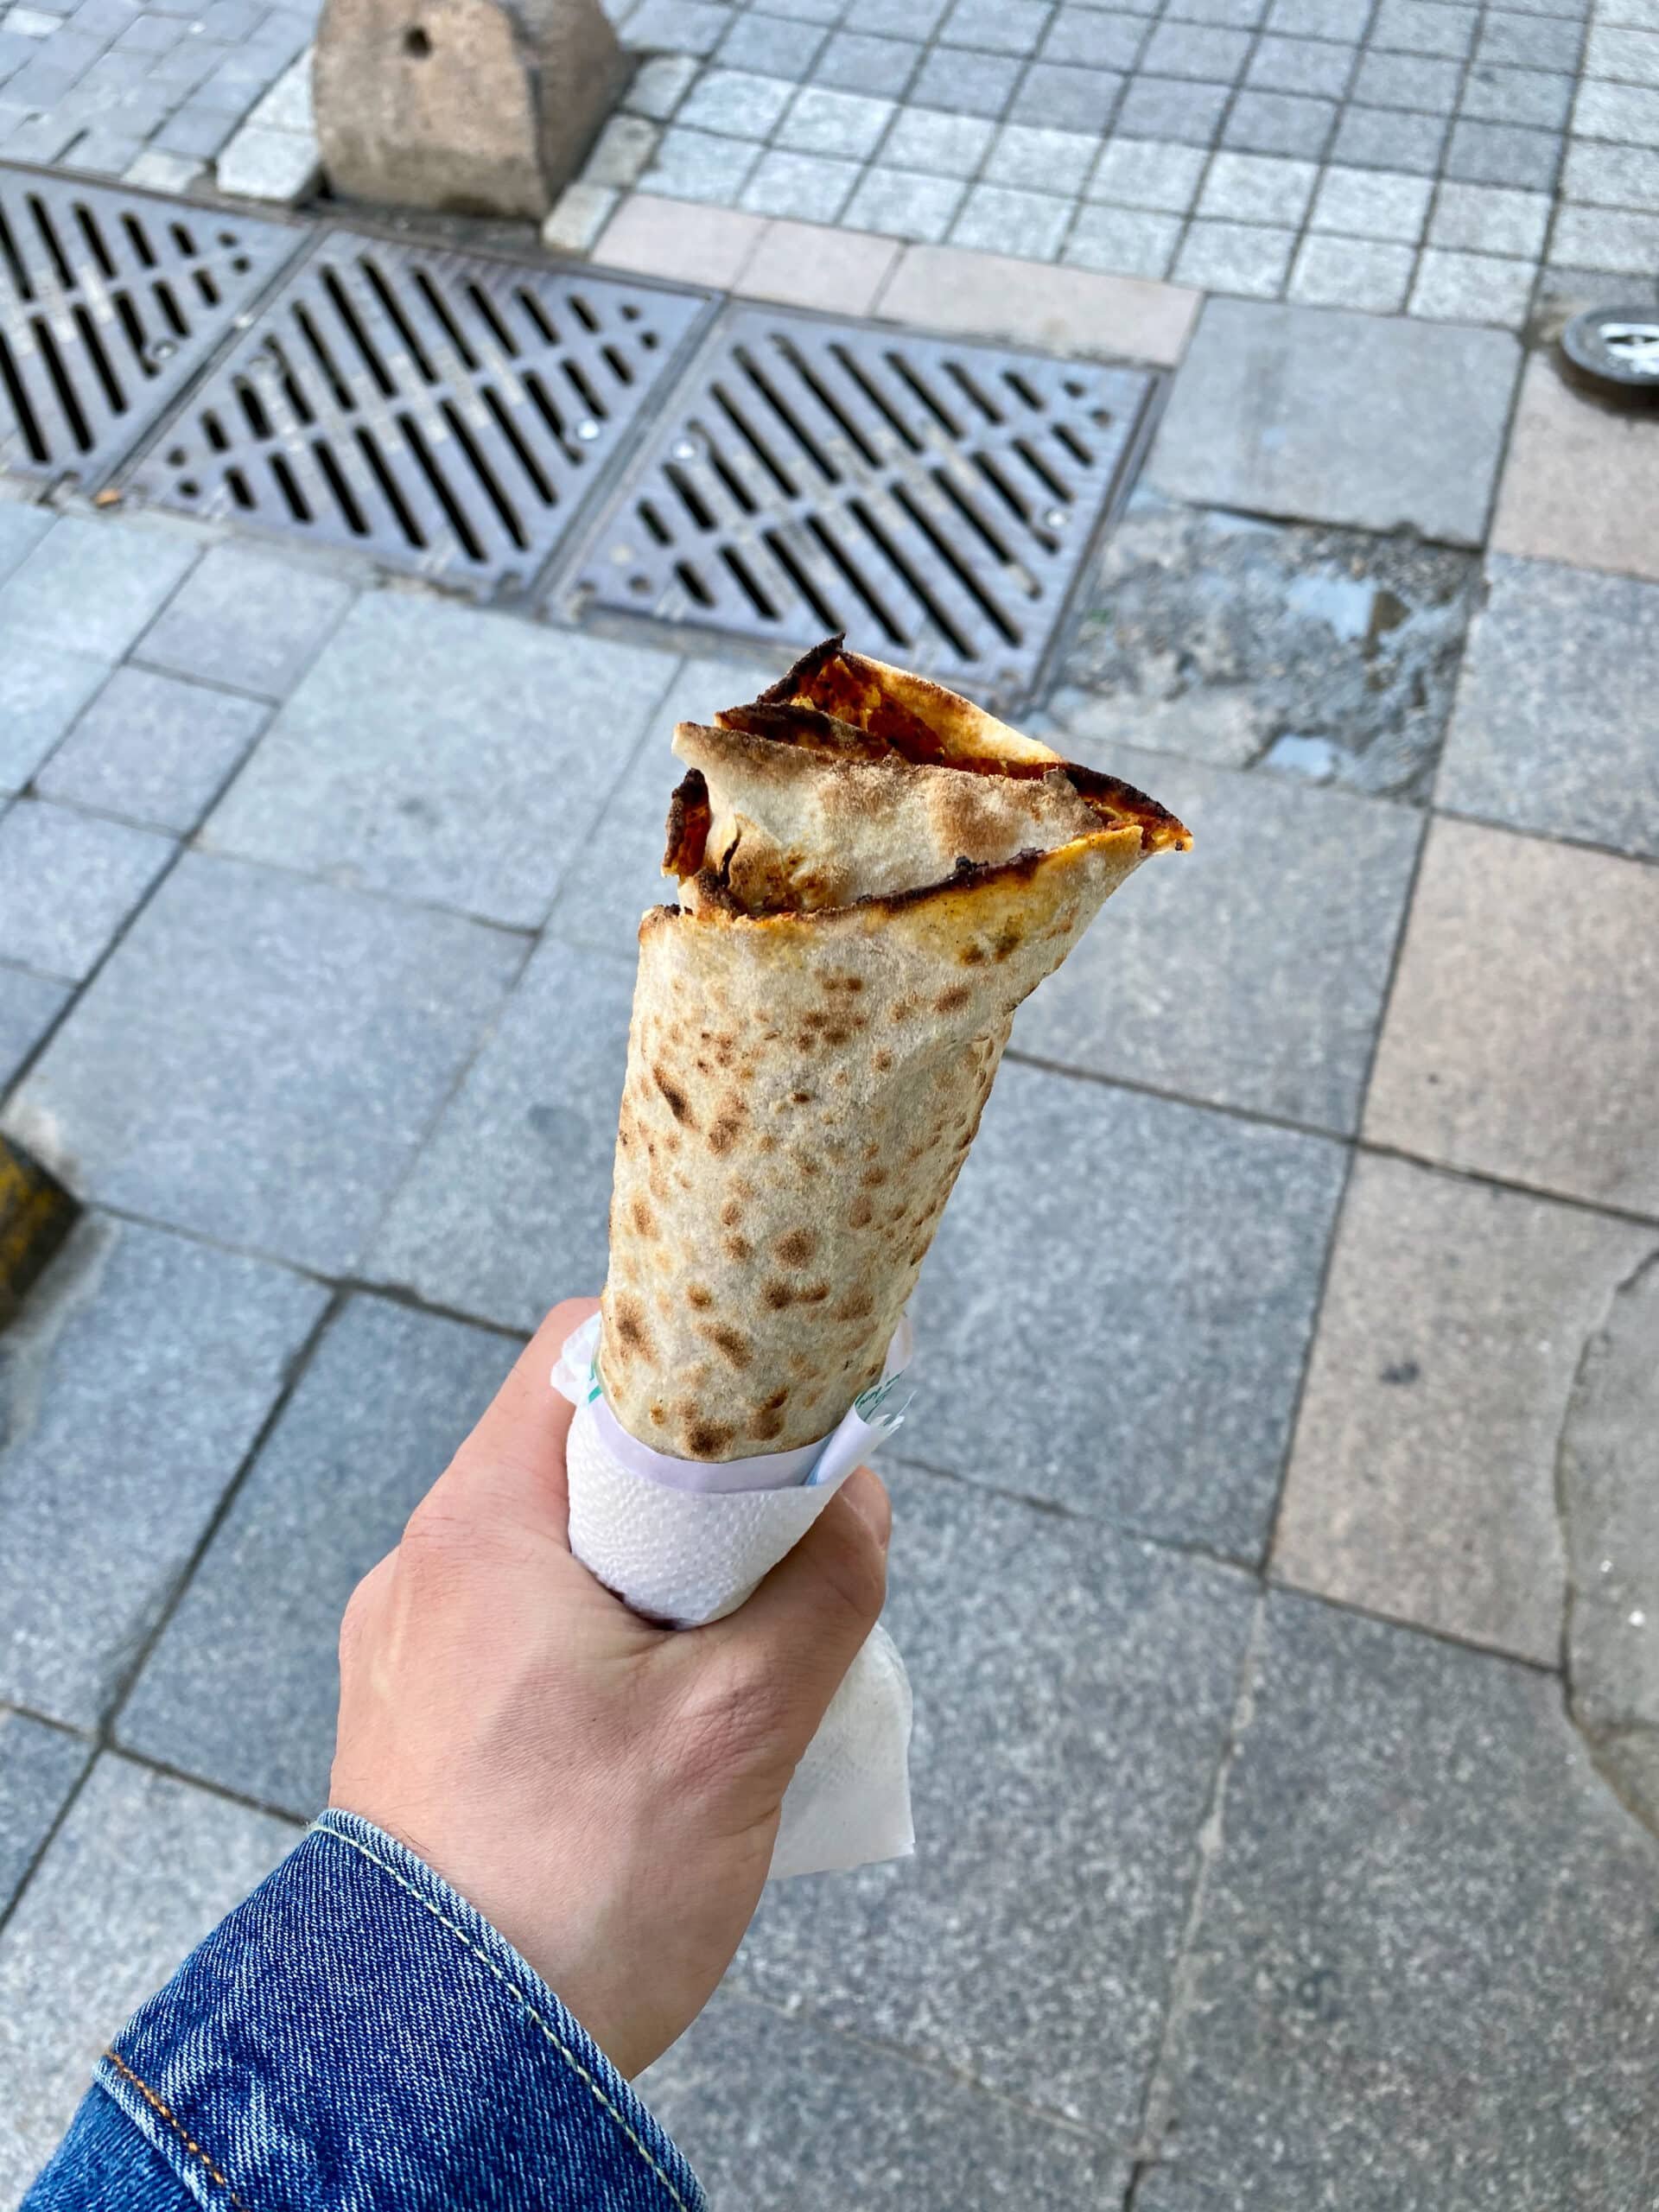 Mate enjoying istanbul street food on the sidewalk - Traditional Turkish Street Food Lahmacun 